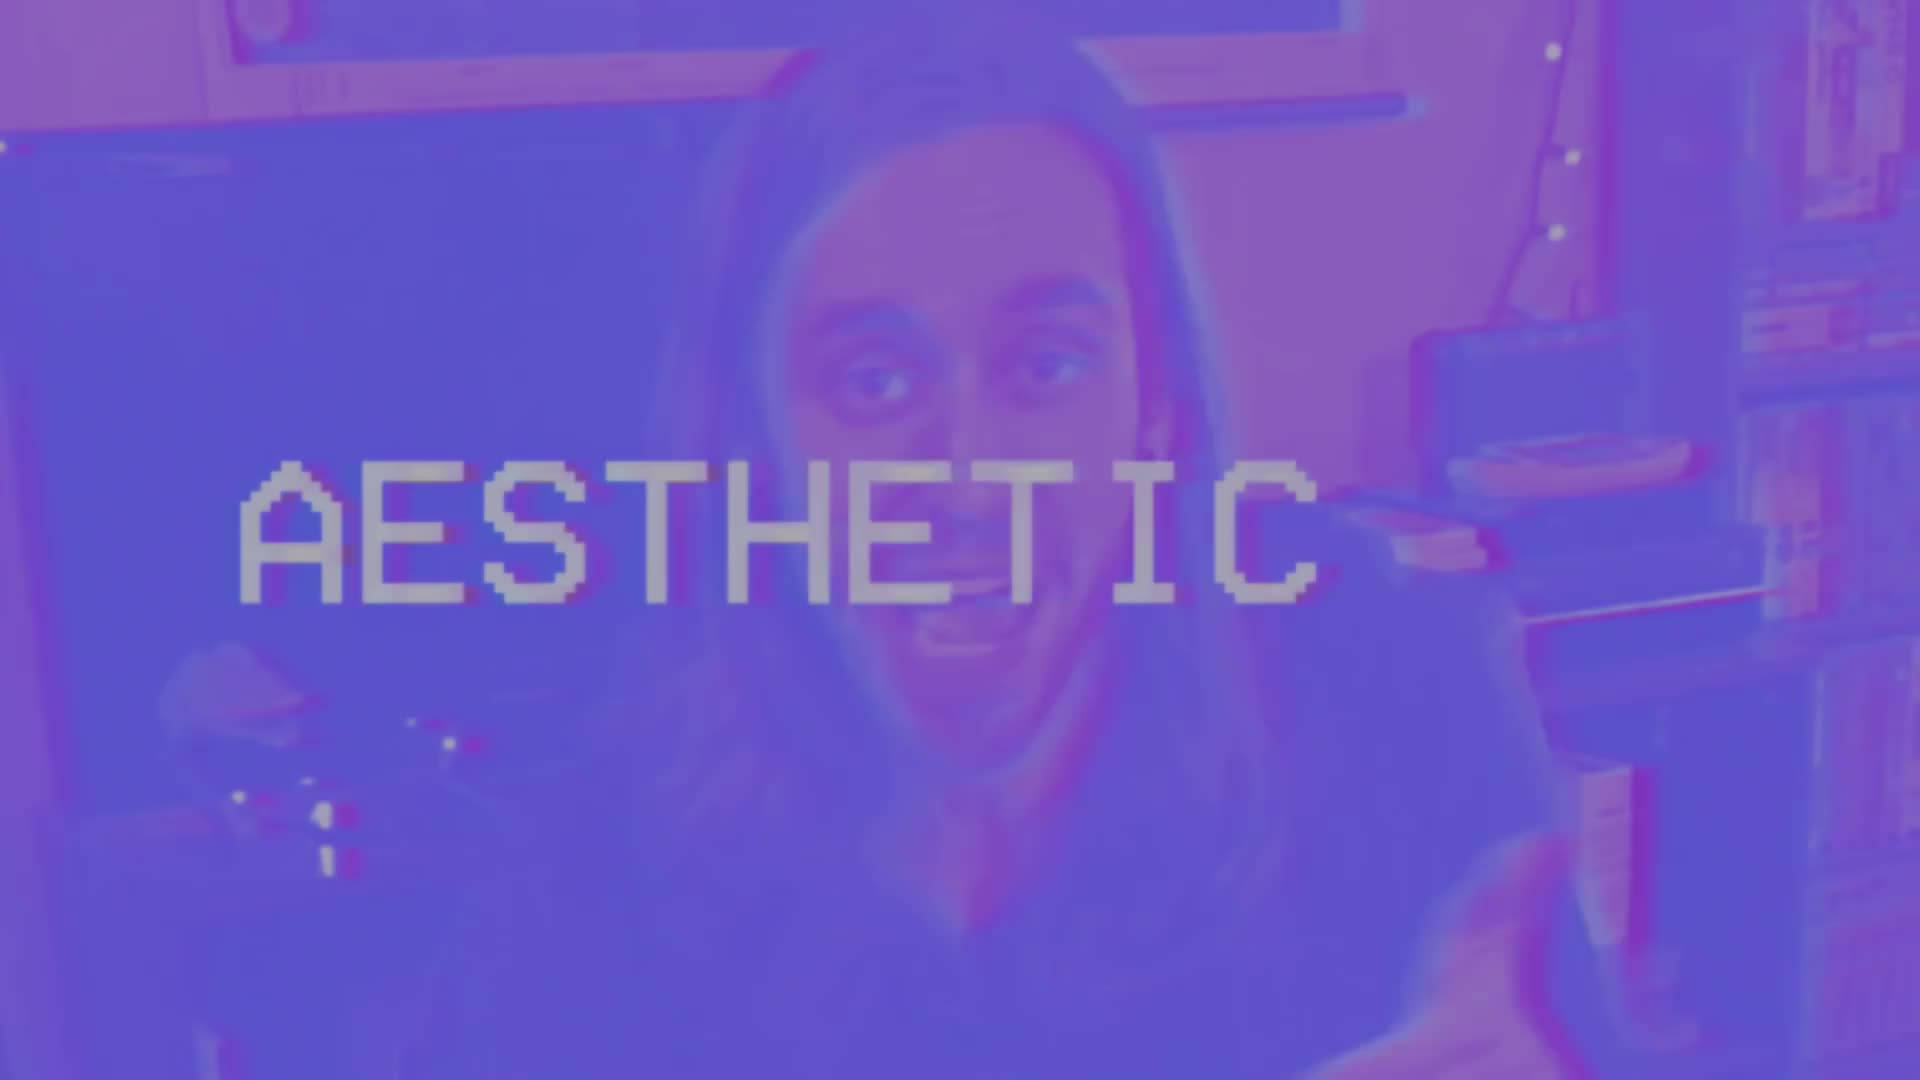 Aesthetic Retro Vhs Video